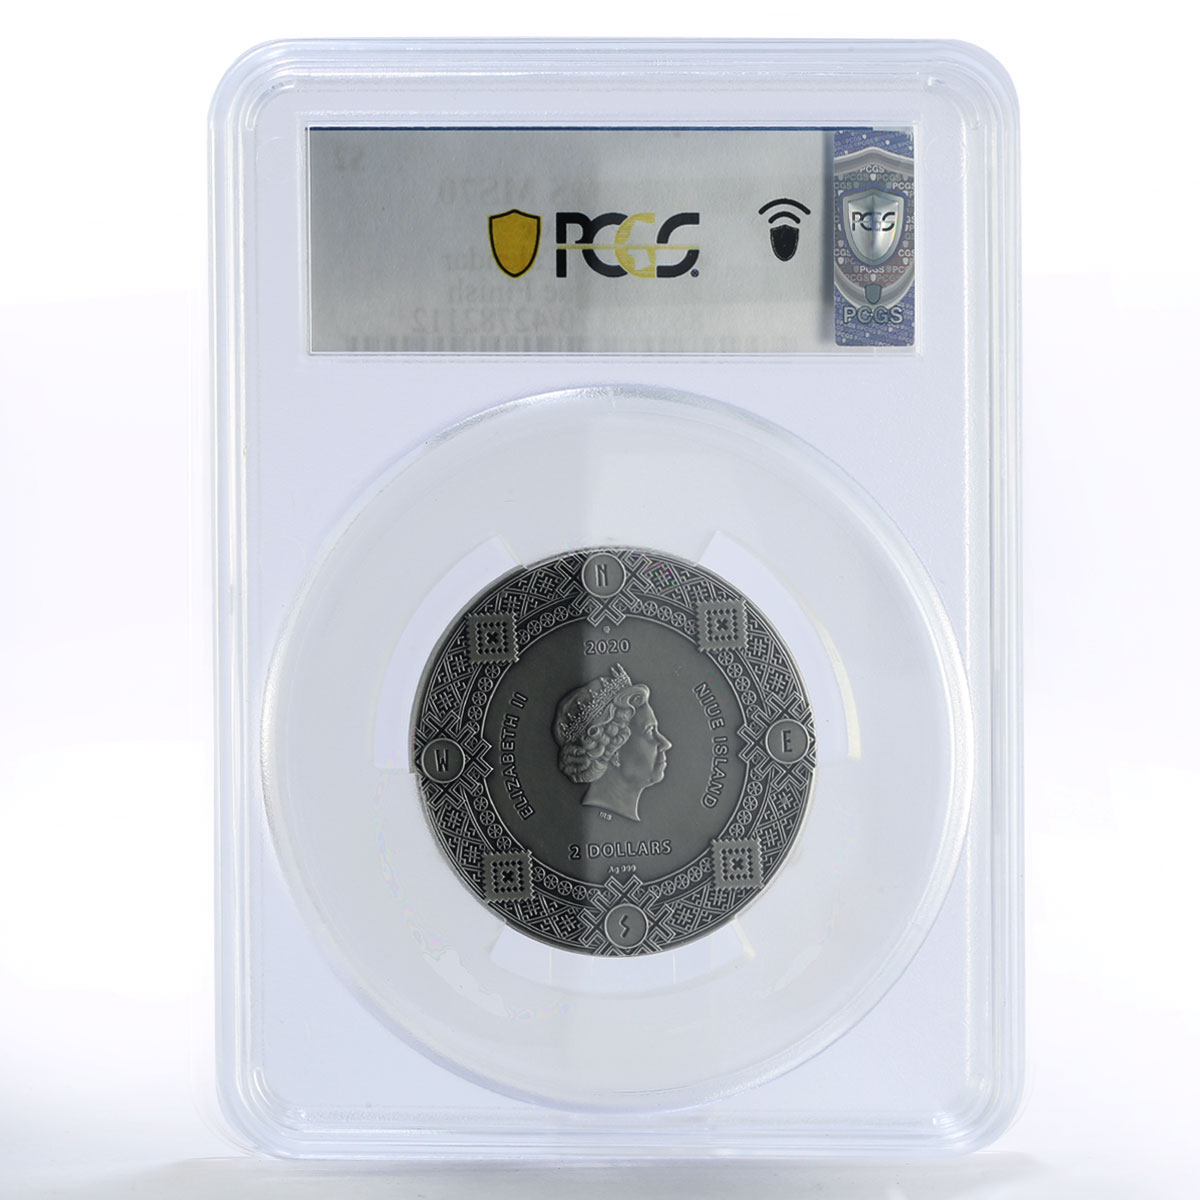 Niue 2 dollars Slavic Calendar Sun Moon Elements Gods MS70 PCGS silver coin 2020